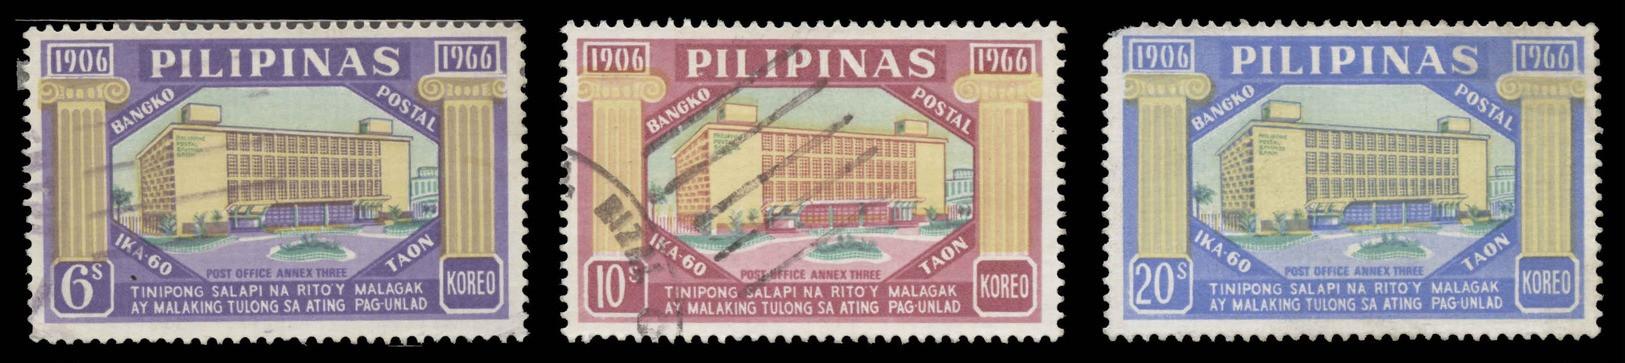 Philippines Scott # 957-959, Set Of 3 (1966) Post Office Annex Three, Used - Filippine